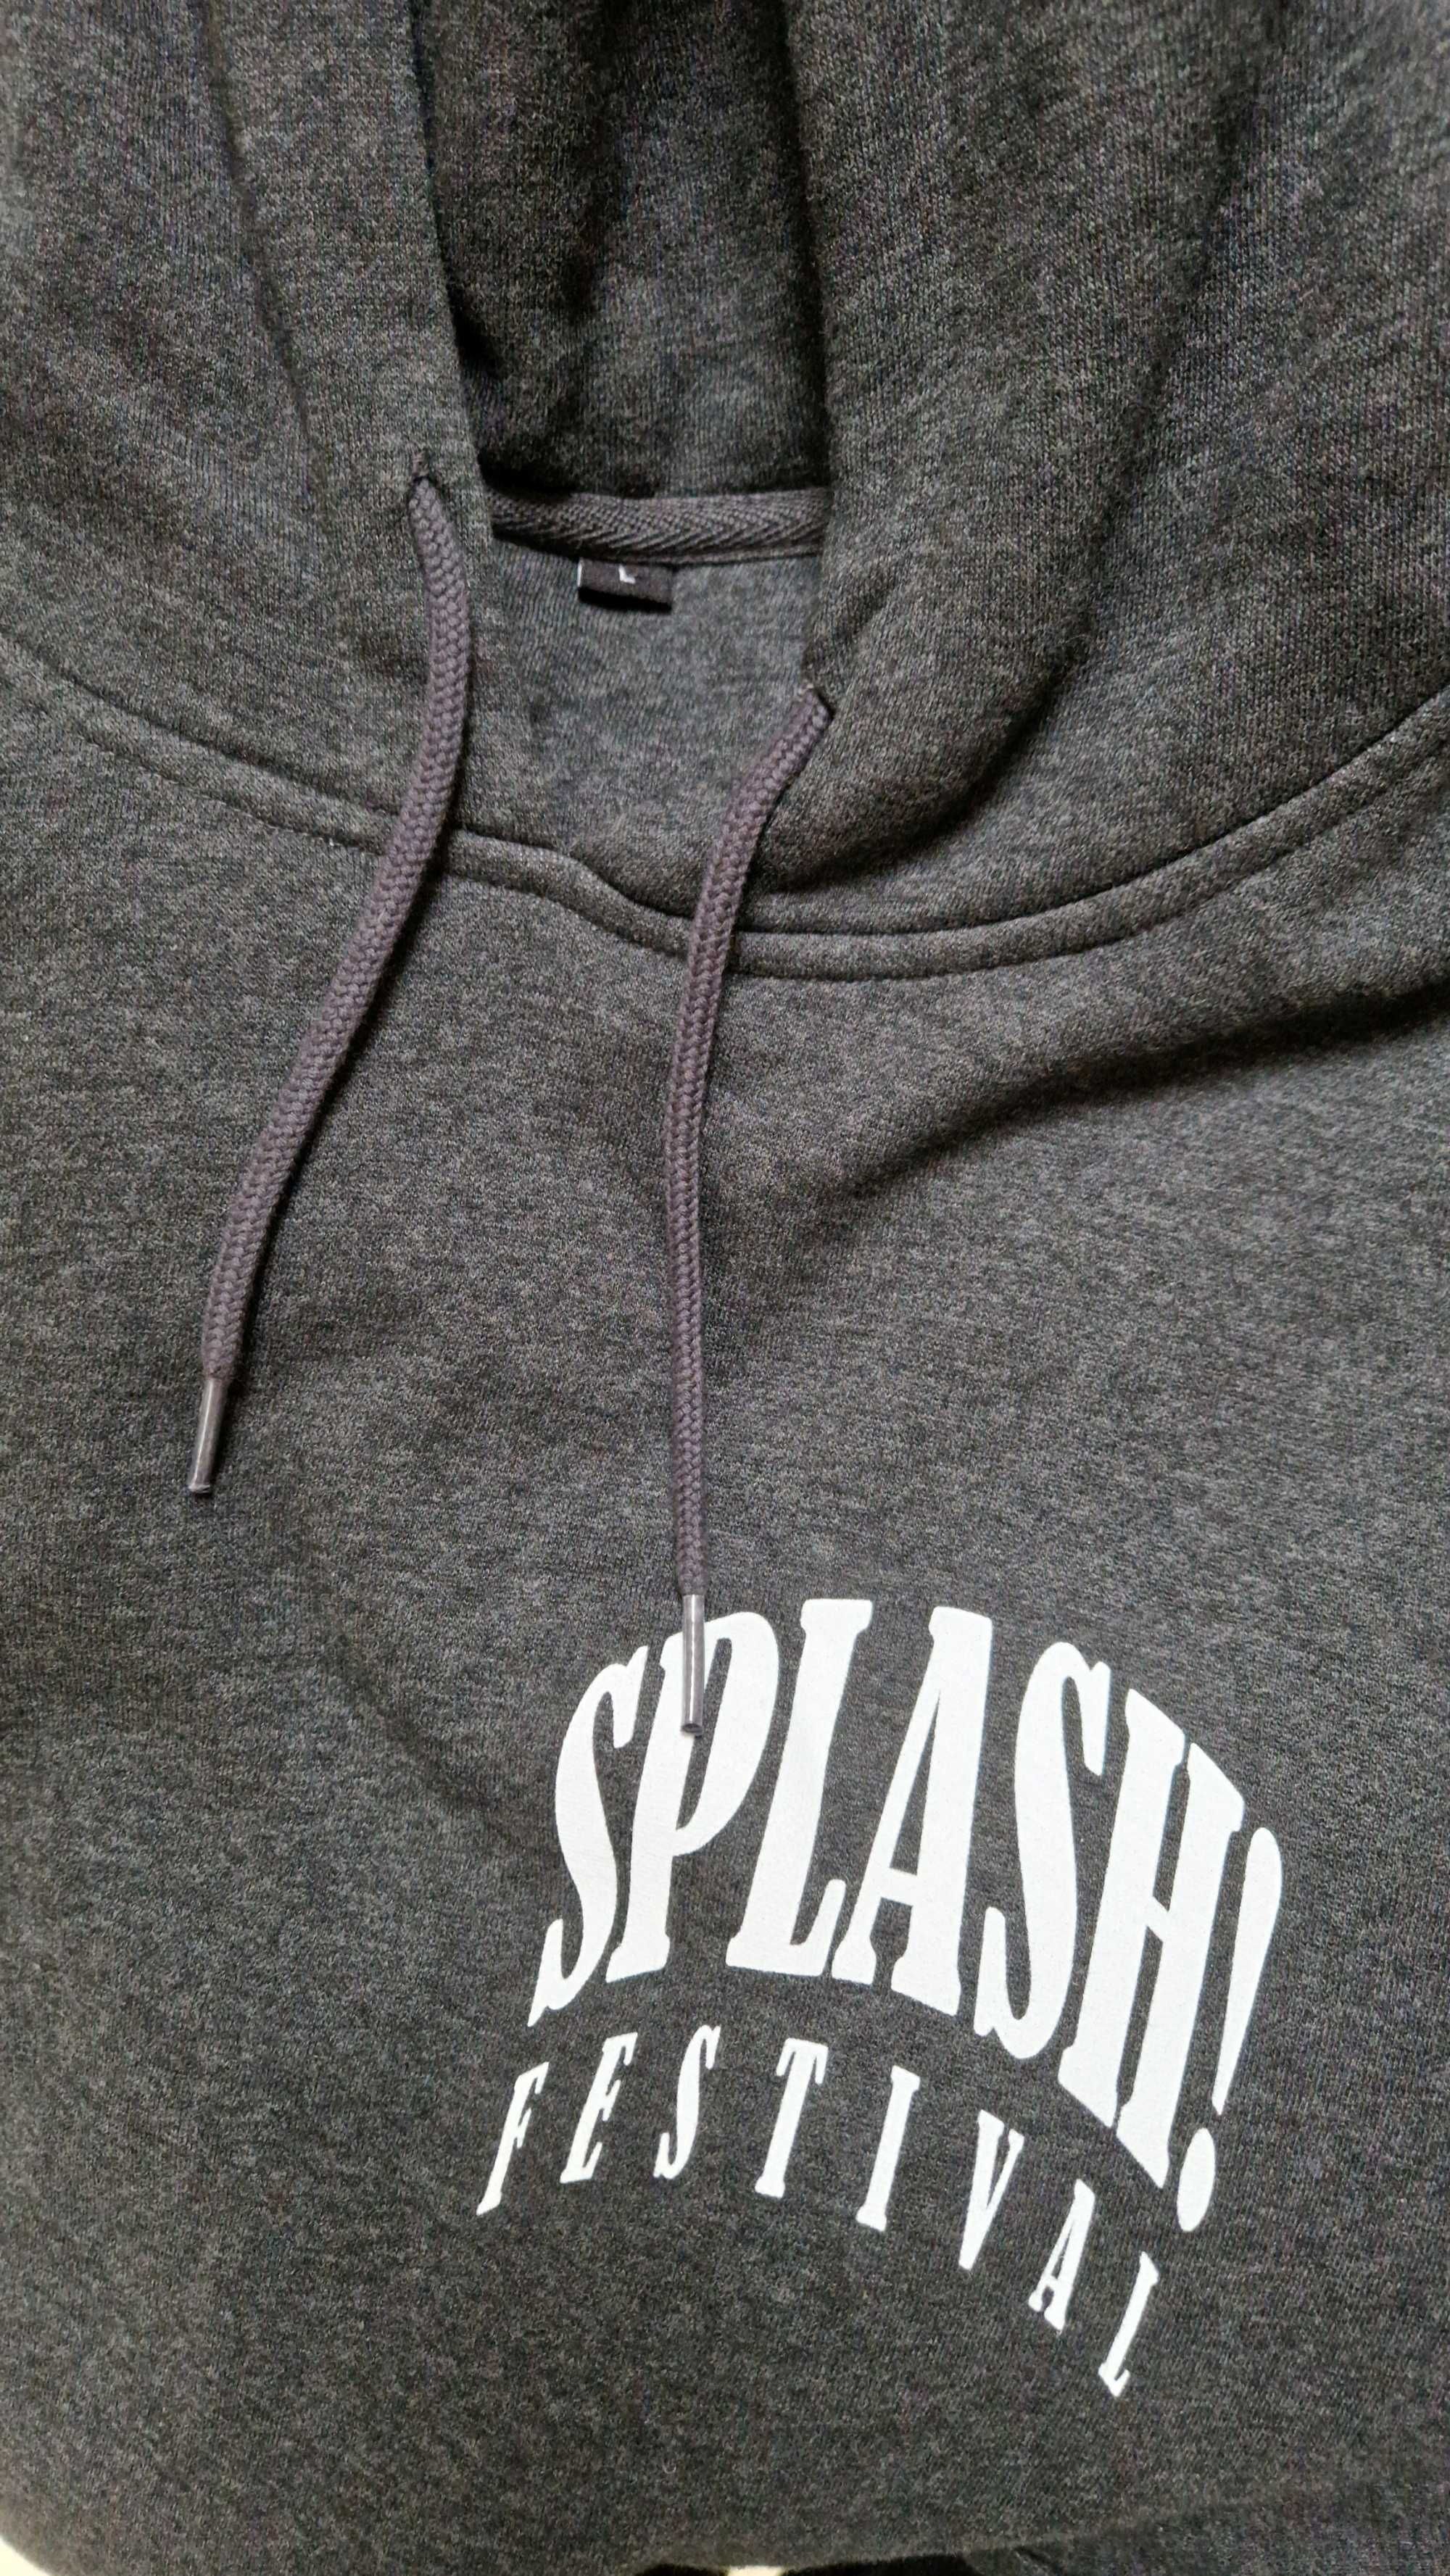 Bluza Splash! Festival - official merch Snipes L A$AP Rocky Future